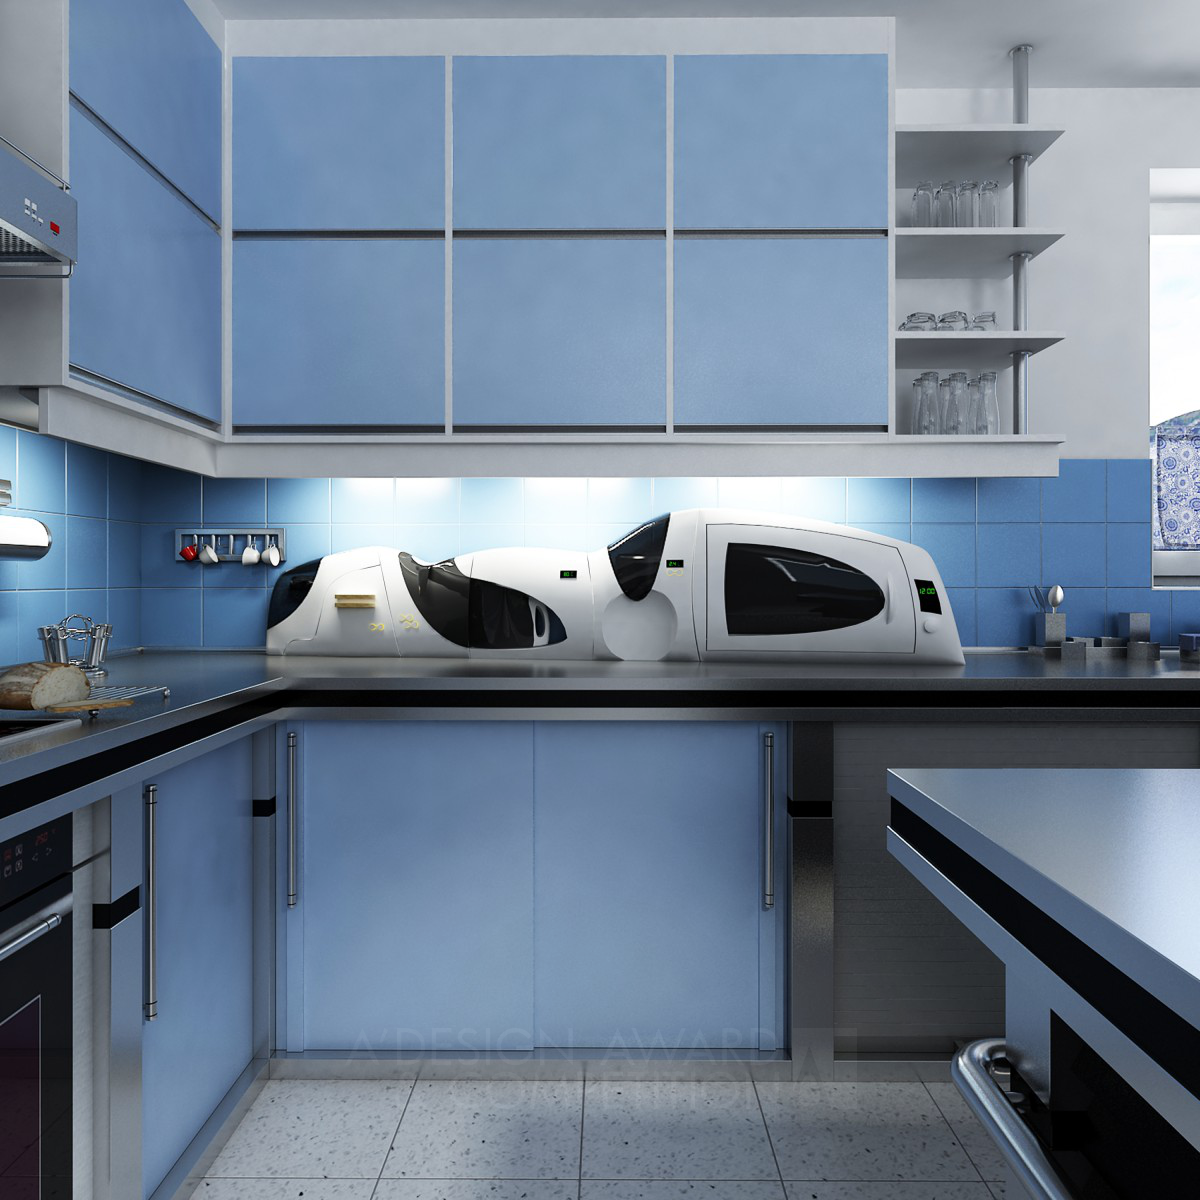 Revolutionizing Kitchen Space: The Kitchen Train by Ahmad Abedini